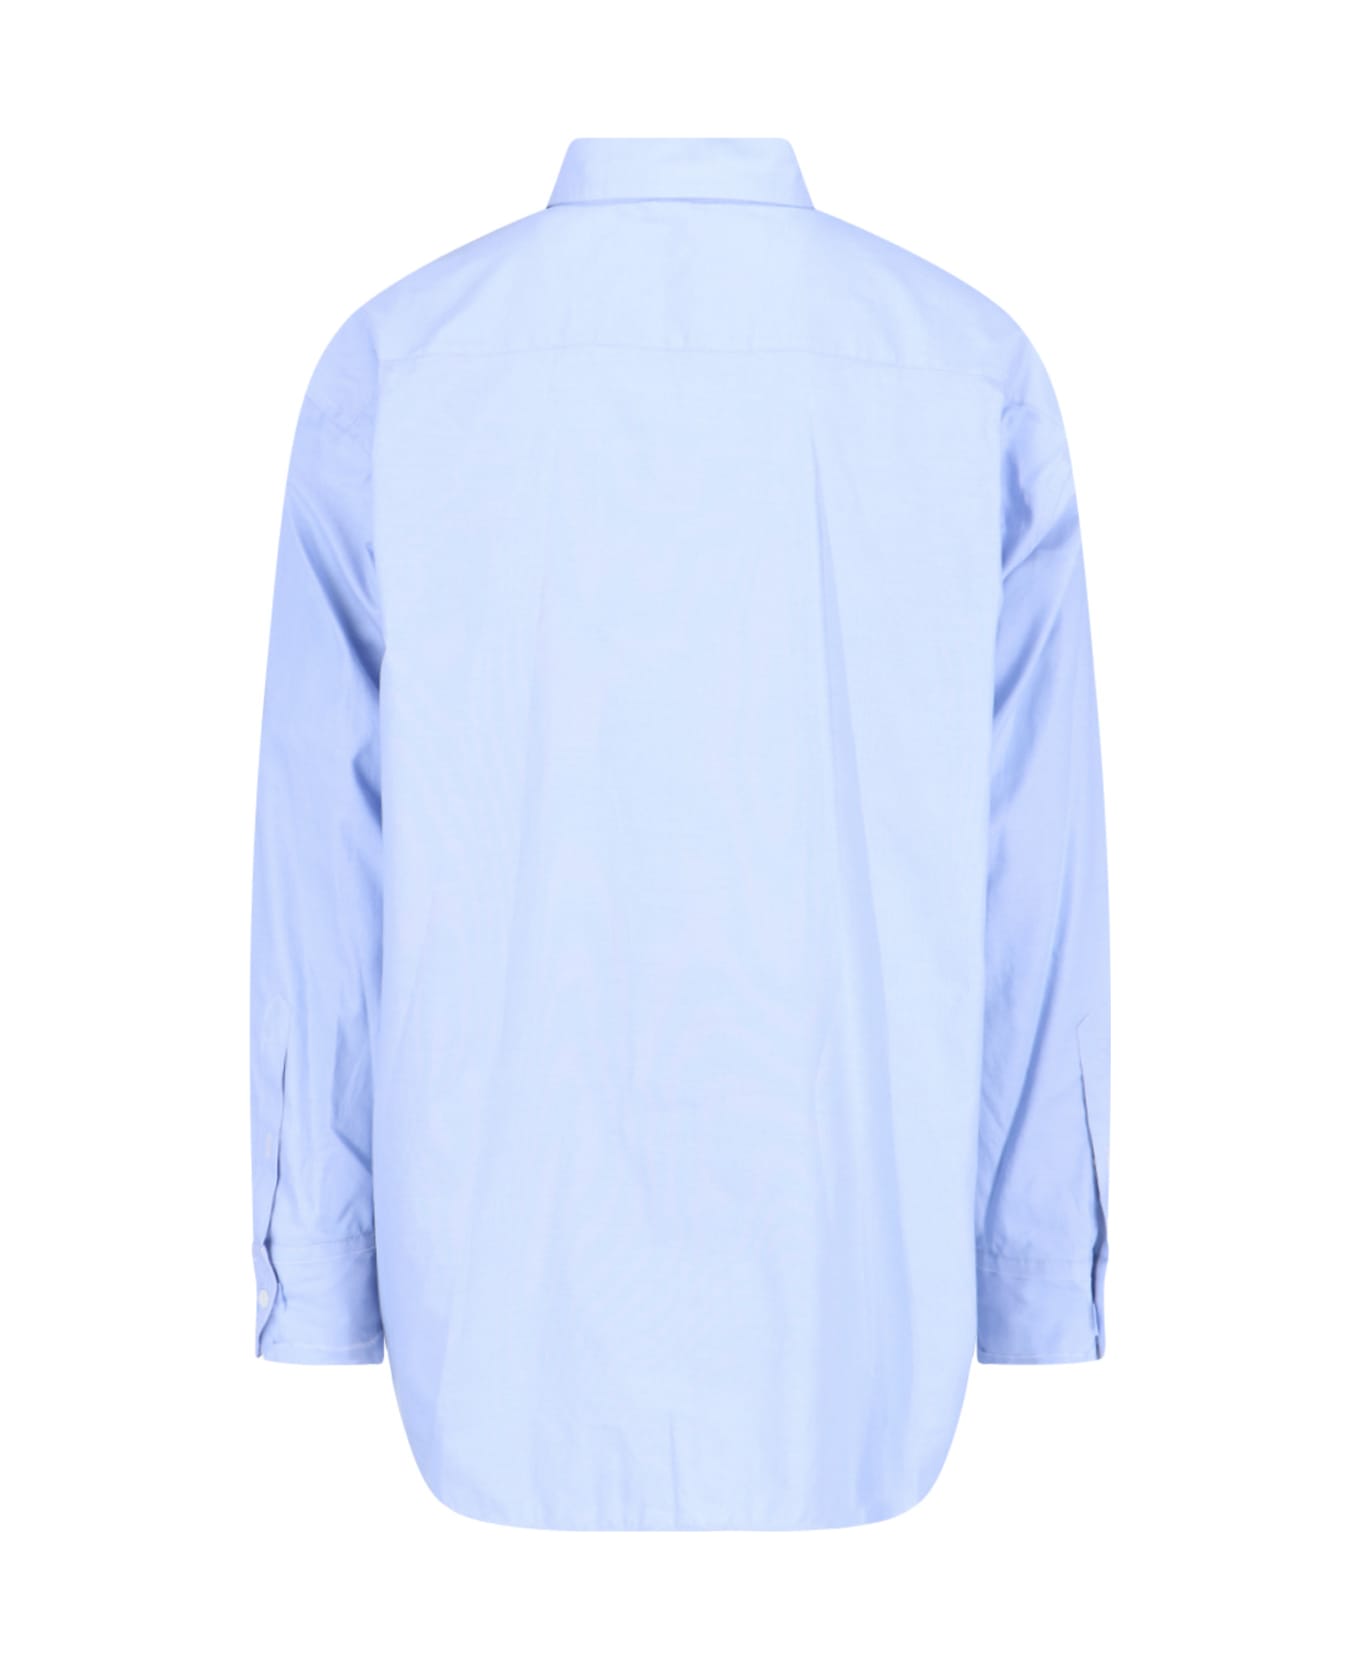 Maison Margiela Oxford Shirt - Light blue